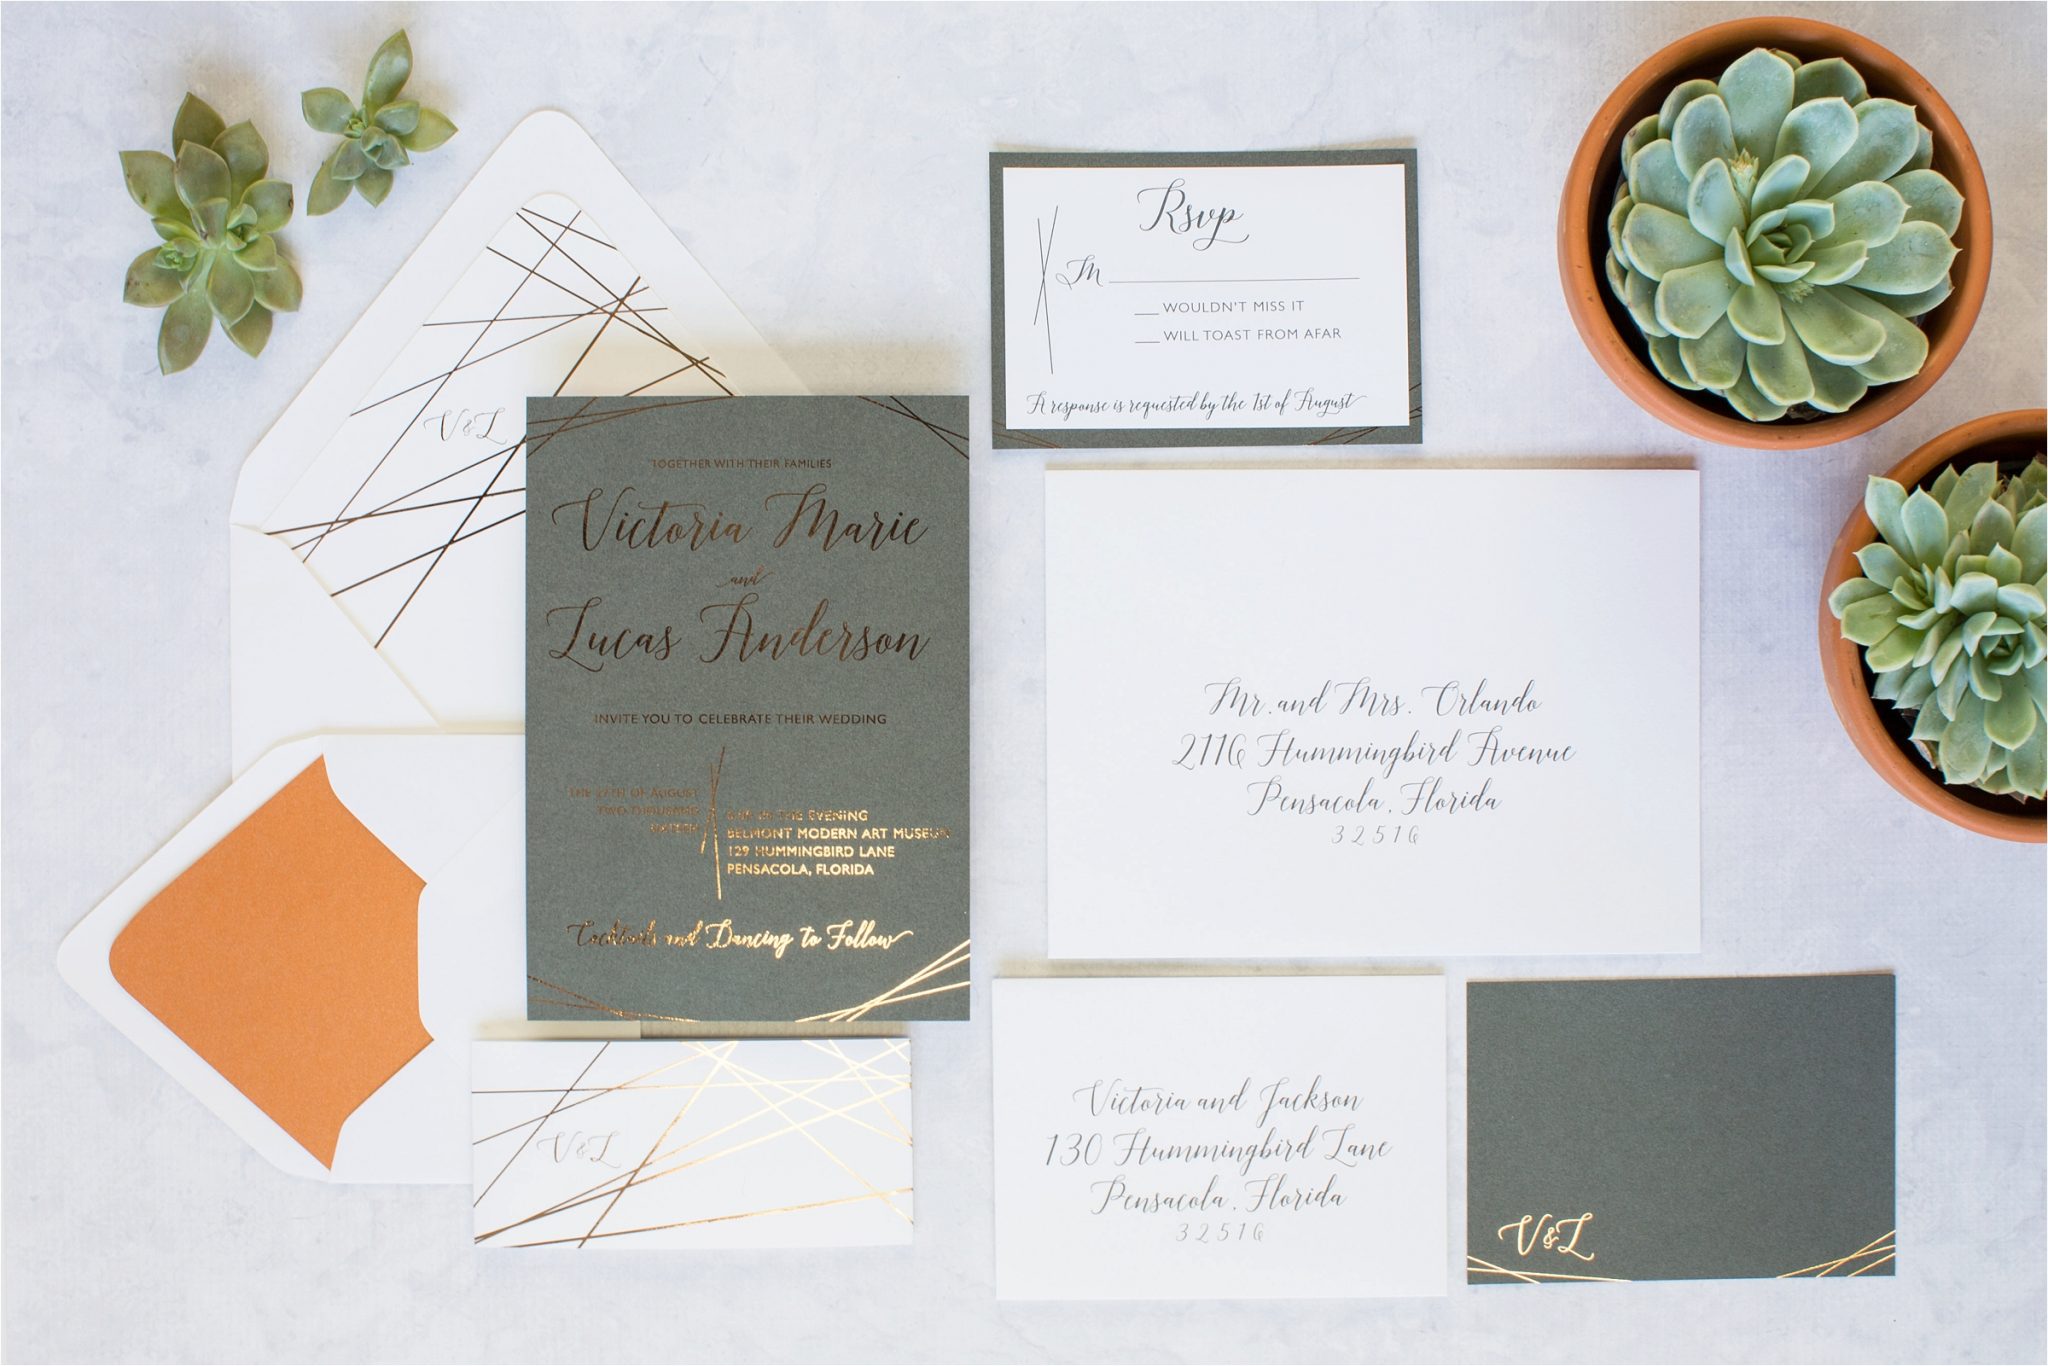 Our Wedding Invitations Designer-Grace And Serendipity-Wedding Details-Wedding Paper-Light pink wedding invitations